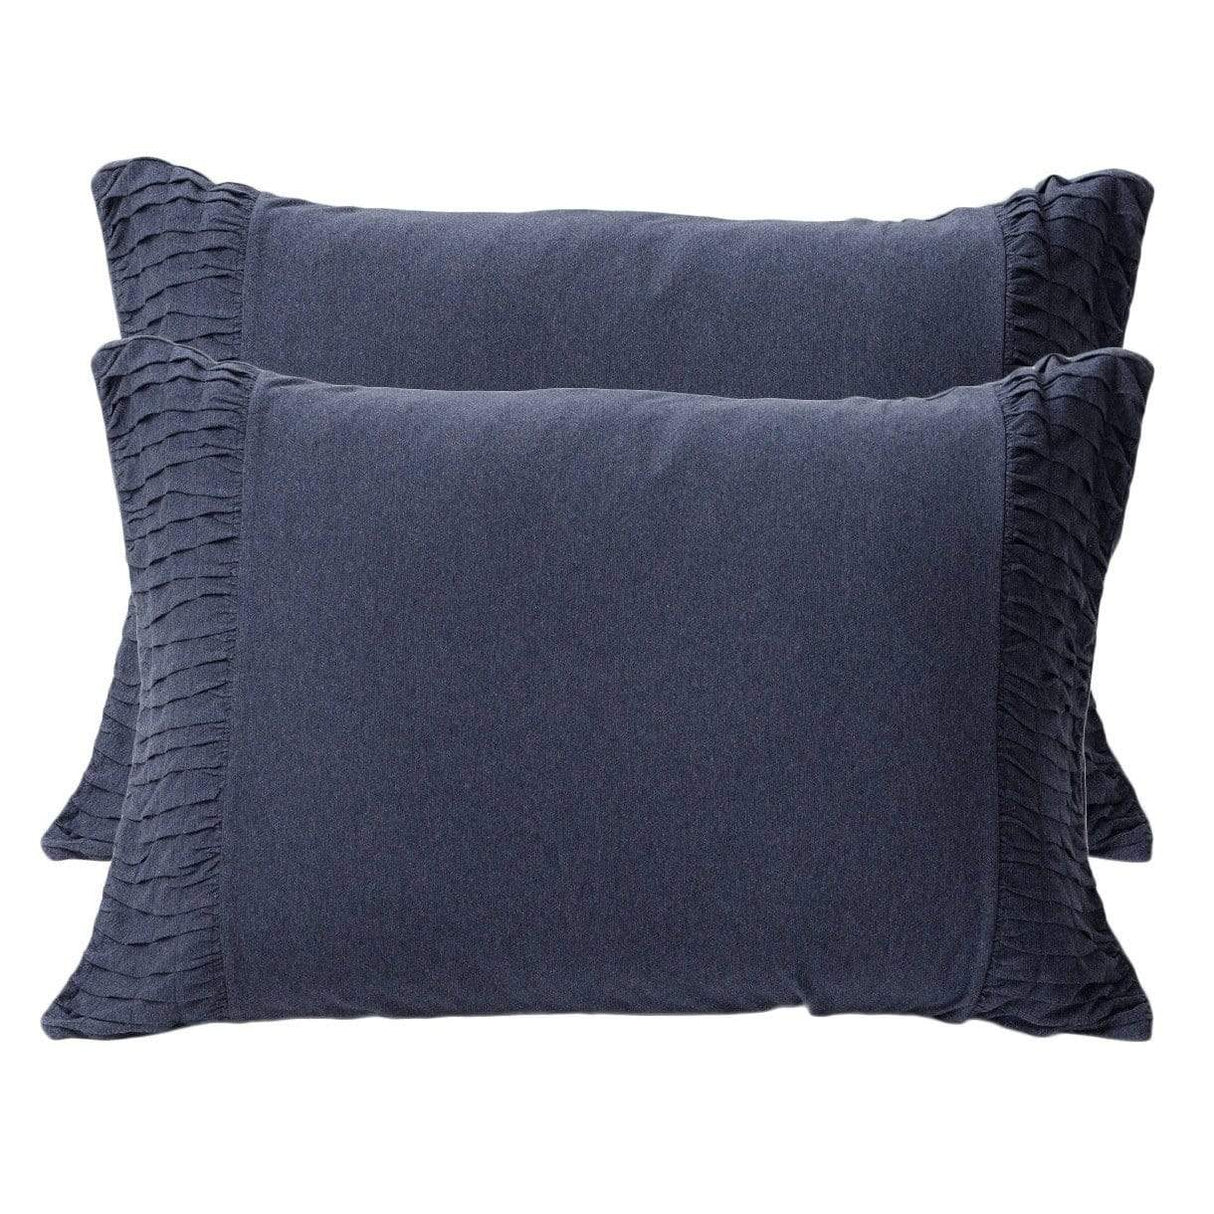 Lazybones Rosette Standard Pillowcase Set in Heather Indigo Organic Cotton Bedding and Bath lazybones-pcsindm